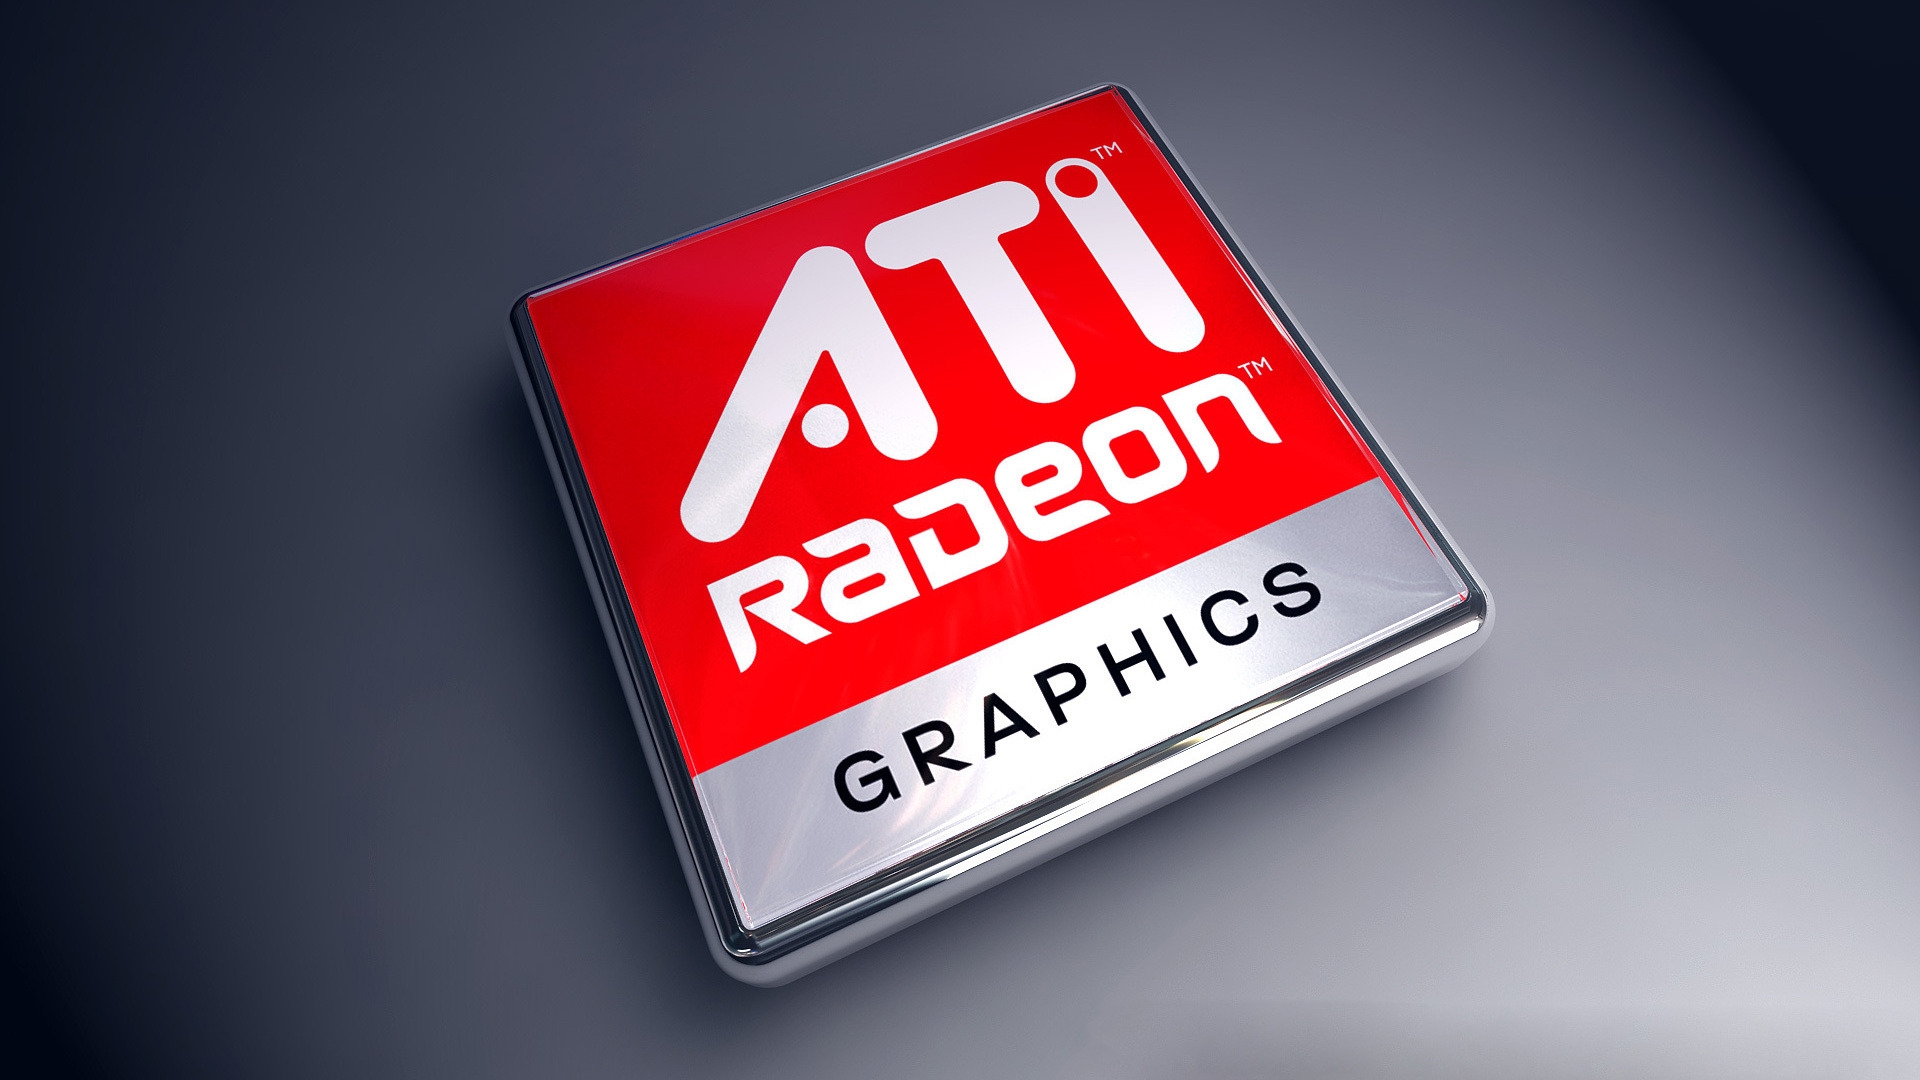 ATI Radeon Graphics for 1920 x 1080 HDTV 1080p resolution